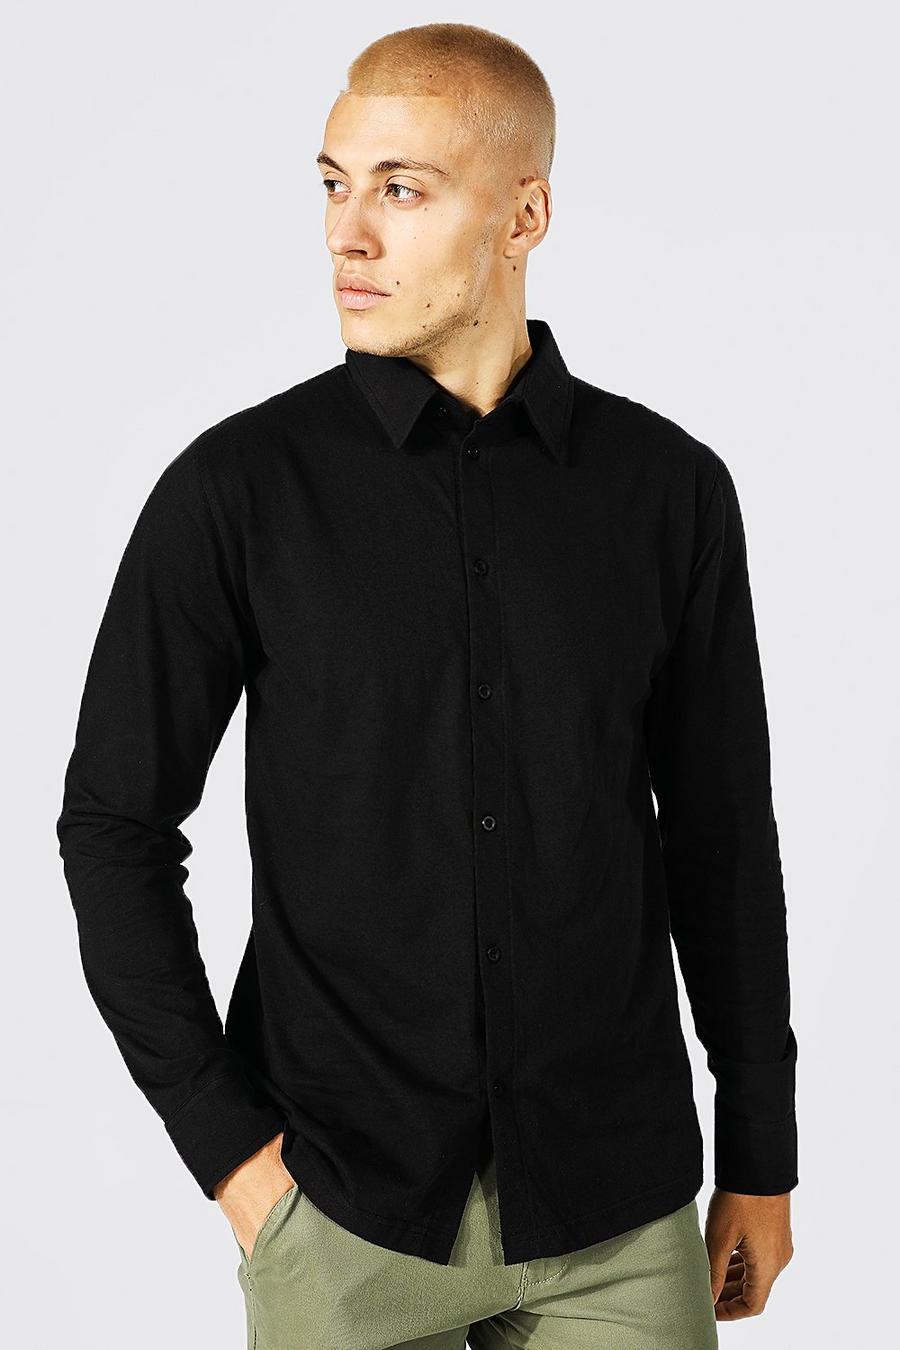 Black Long Sleeve Jersey Shirt